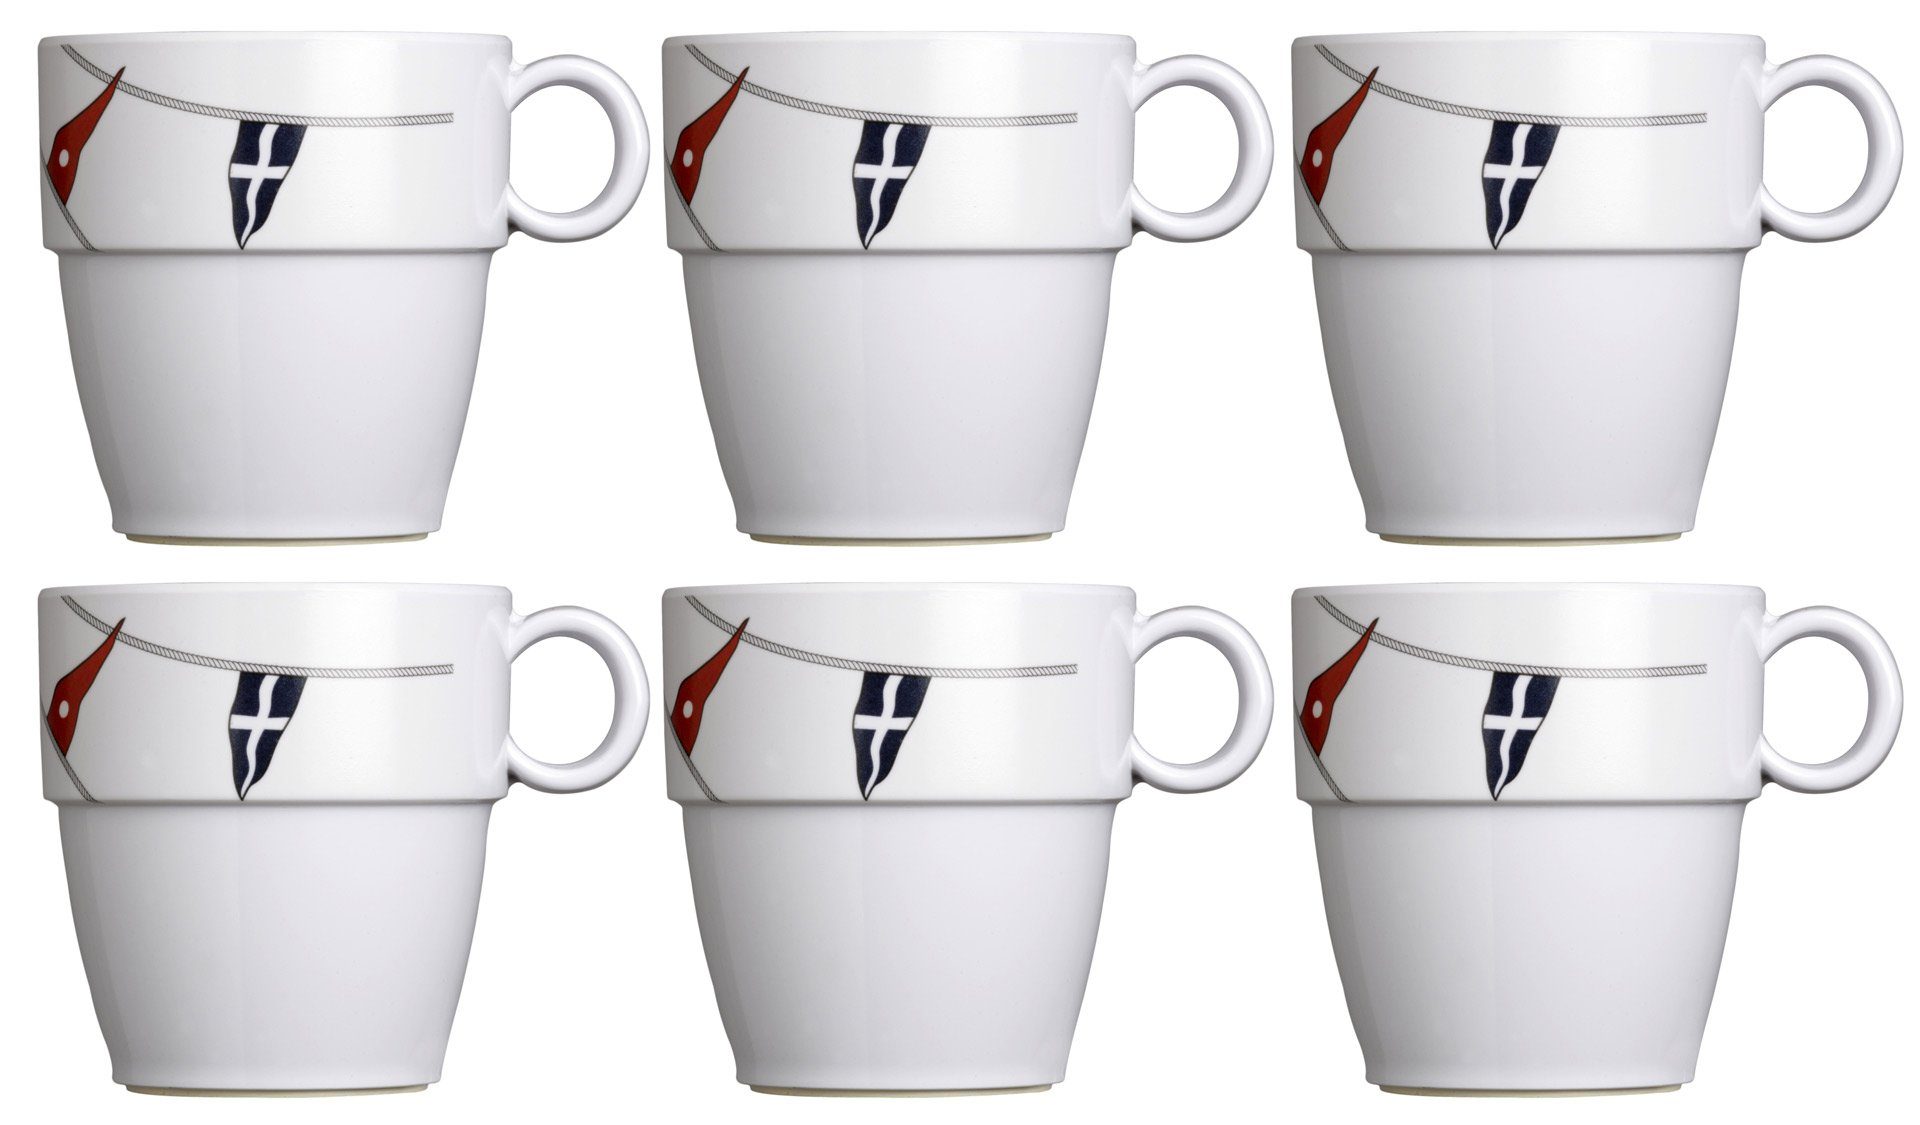 Marine Business Tasse Kaffeebecher / Mug / Kaffee-Pott - Regata